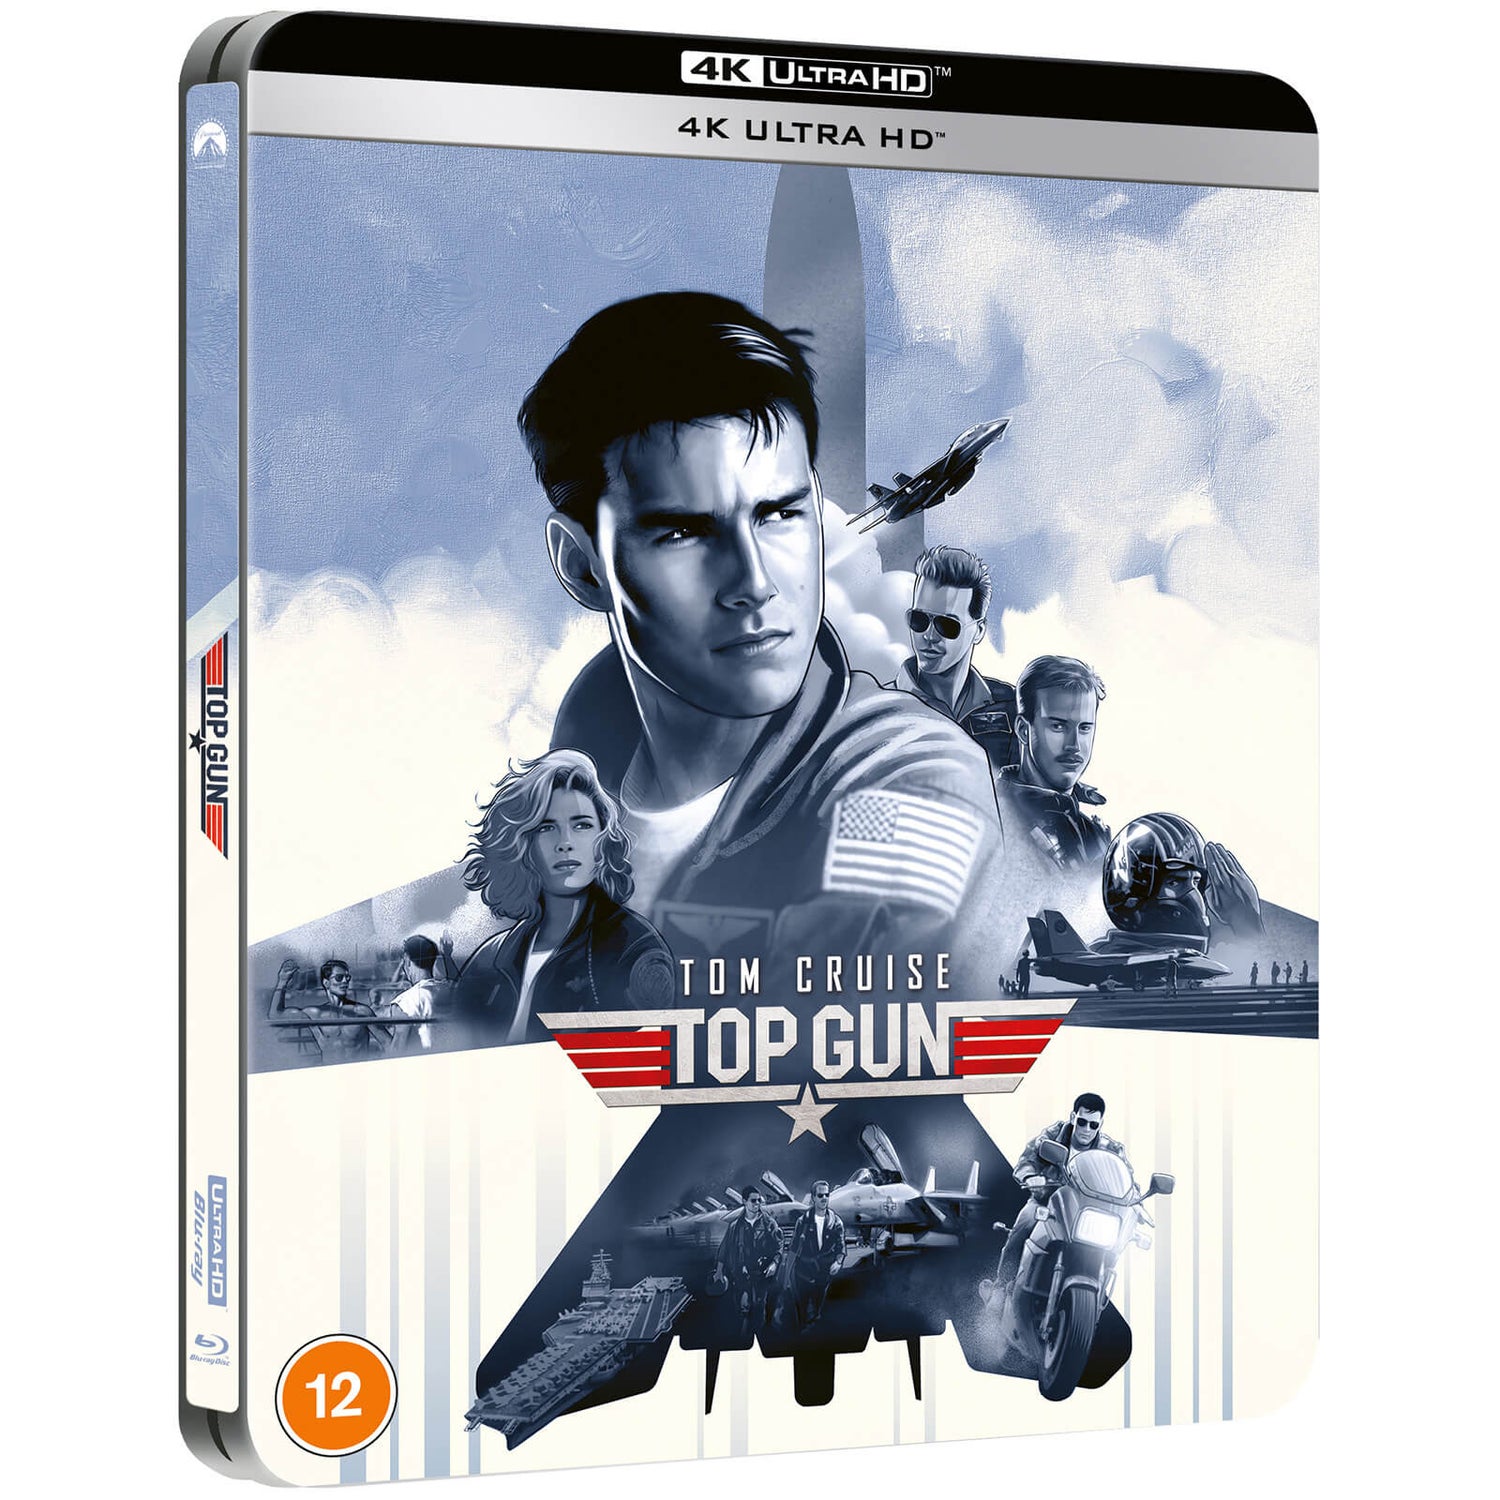 Top Gun - Limited Edition 4K Ultra HD Steelbook